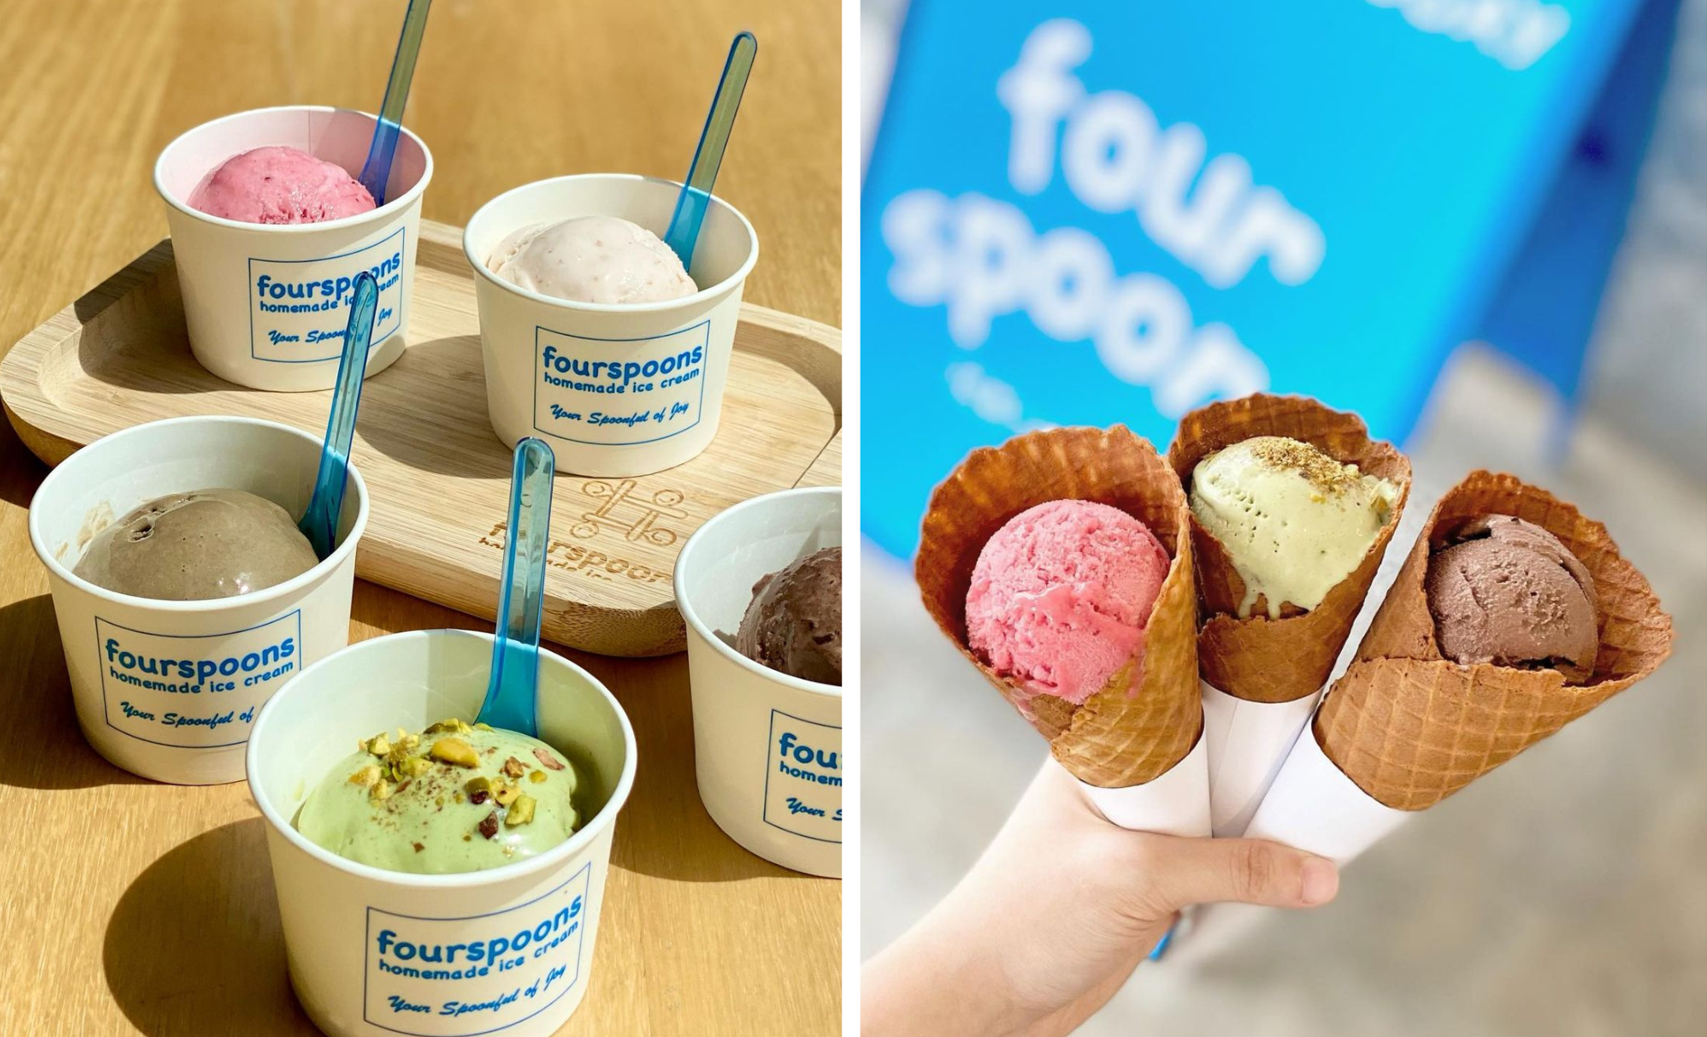 ice cream penang - fourspoons ice cream